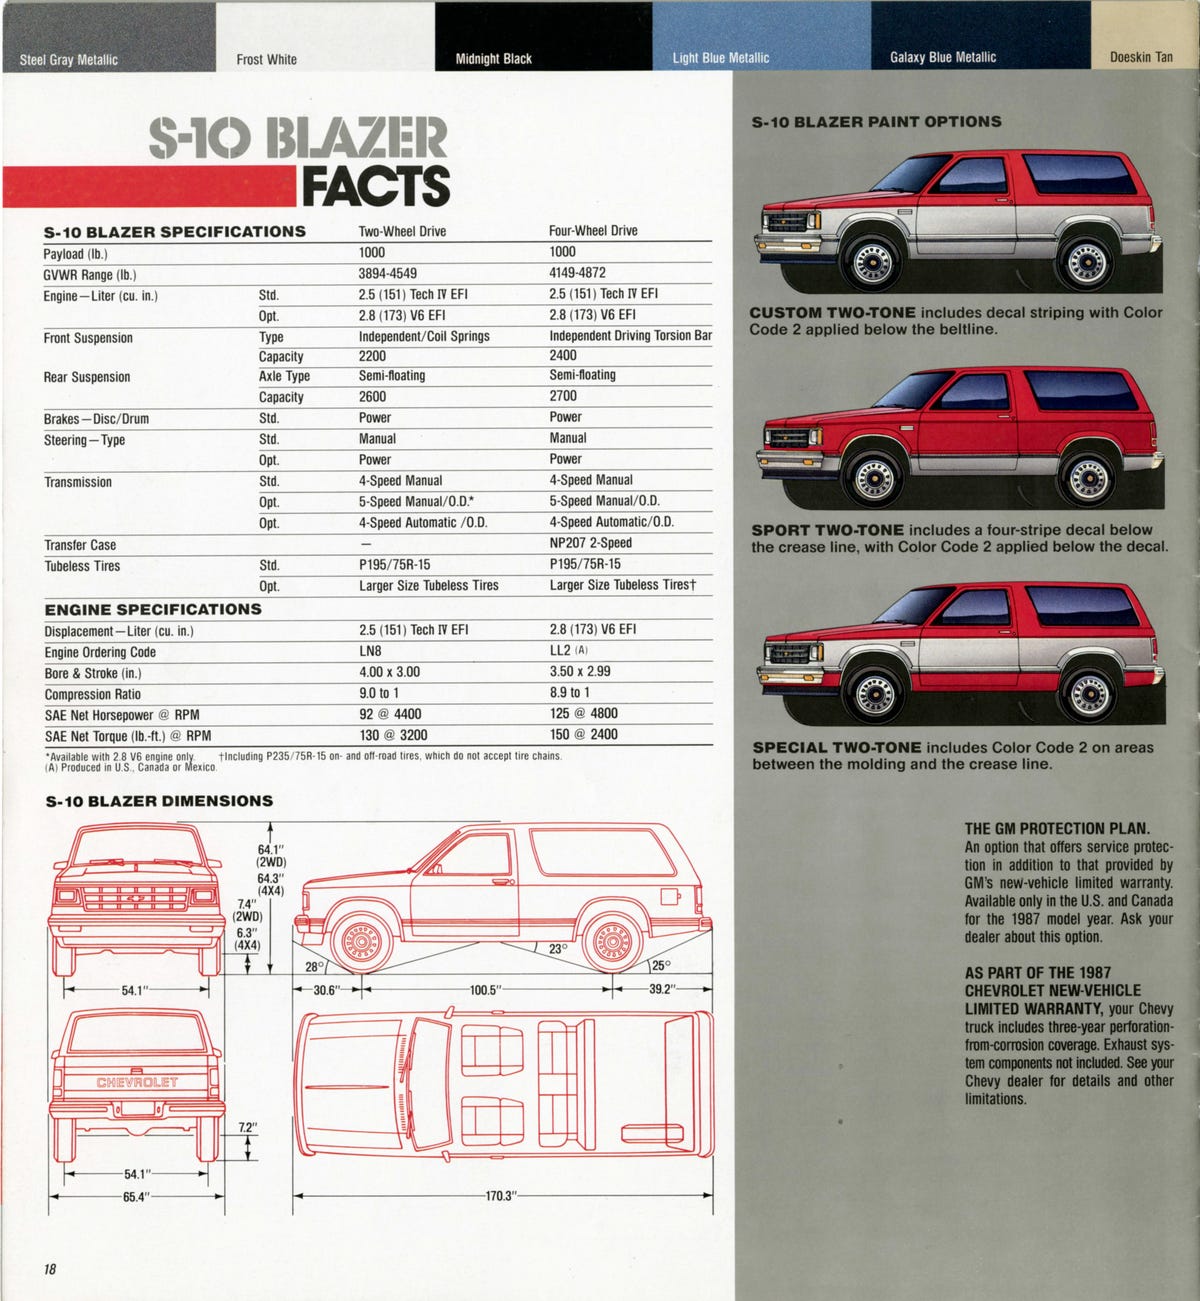 1987-chevrolet-s-10-blazer-sales-brochure-18